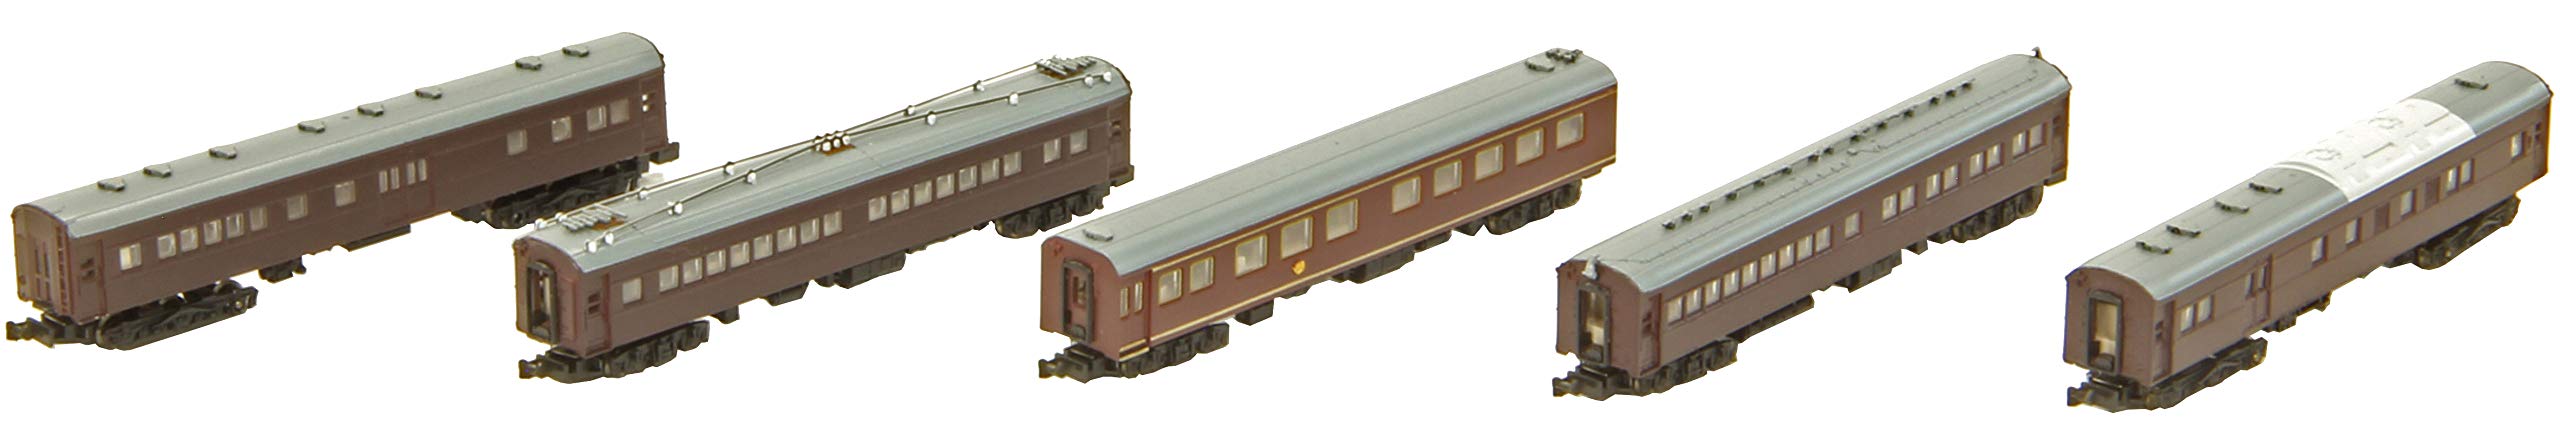 Rokuhan Z Gauge Late Specification 5-Car T036-1 Railway Model Passenger Train Set